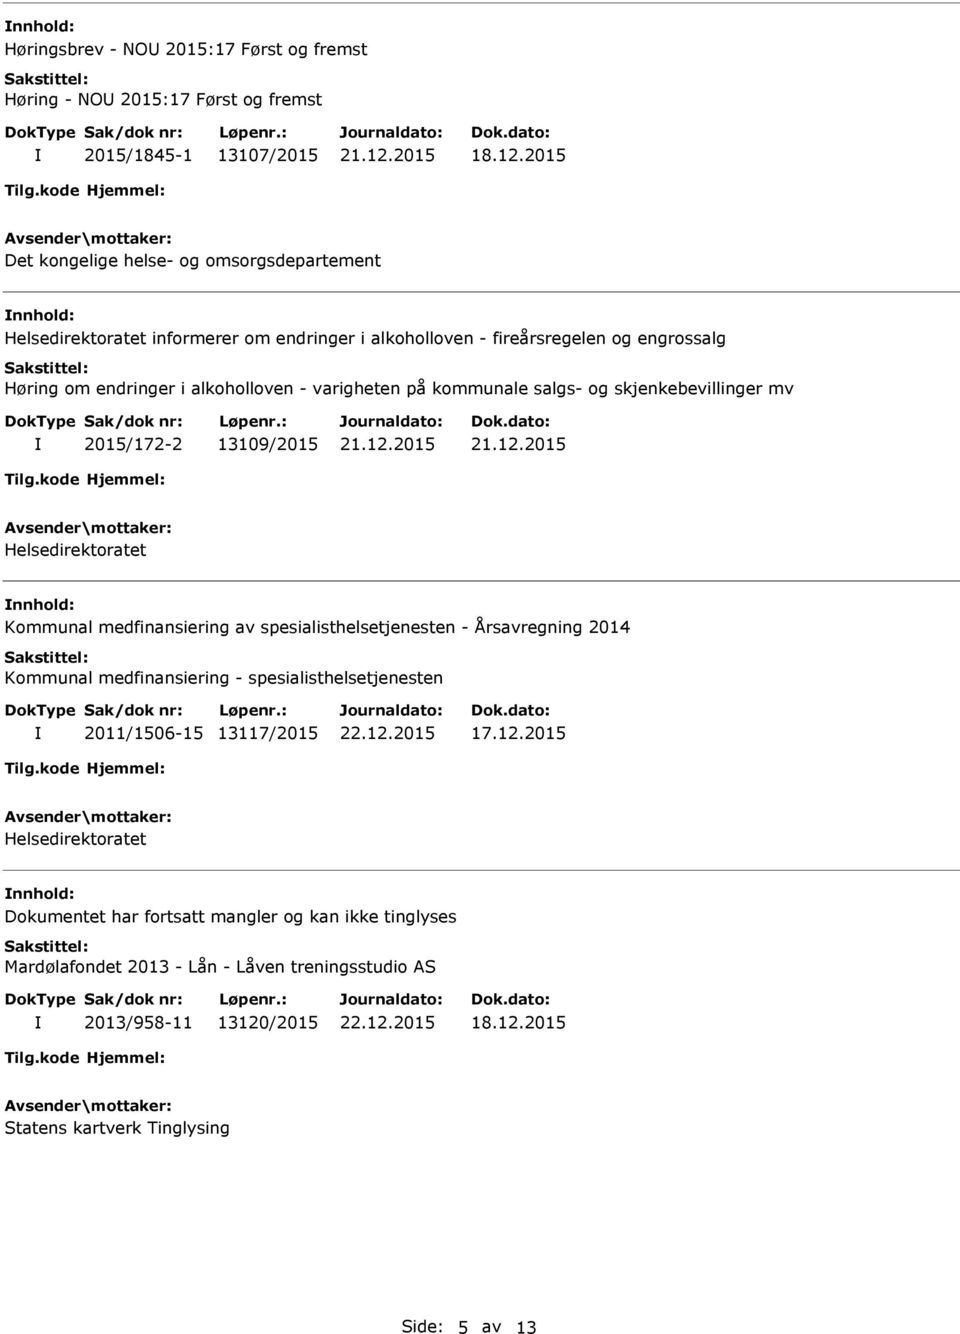 Helsedirektoratet nnhold: Kommunal medfinansiering av spesialisthelsetjenesten - Årsavregning 2014 Kommunal medfinansiering - spesialisthelsetjenesten 2011/1506-15 13117/2015 17.12.